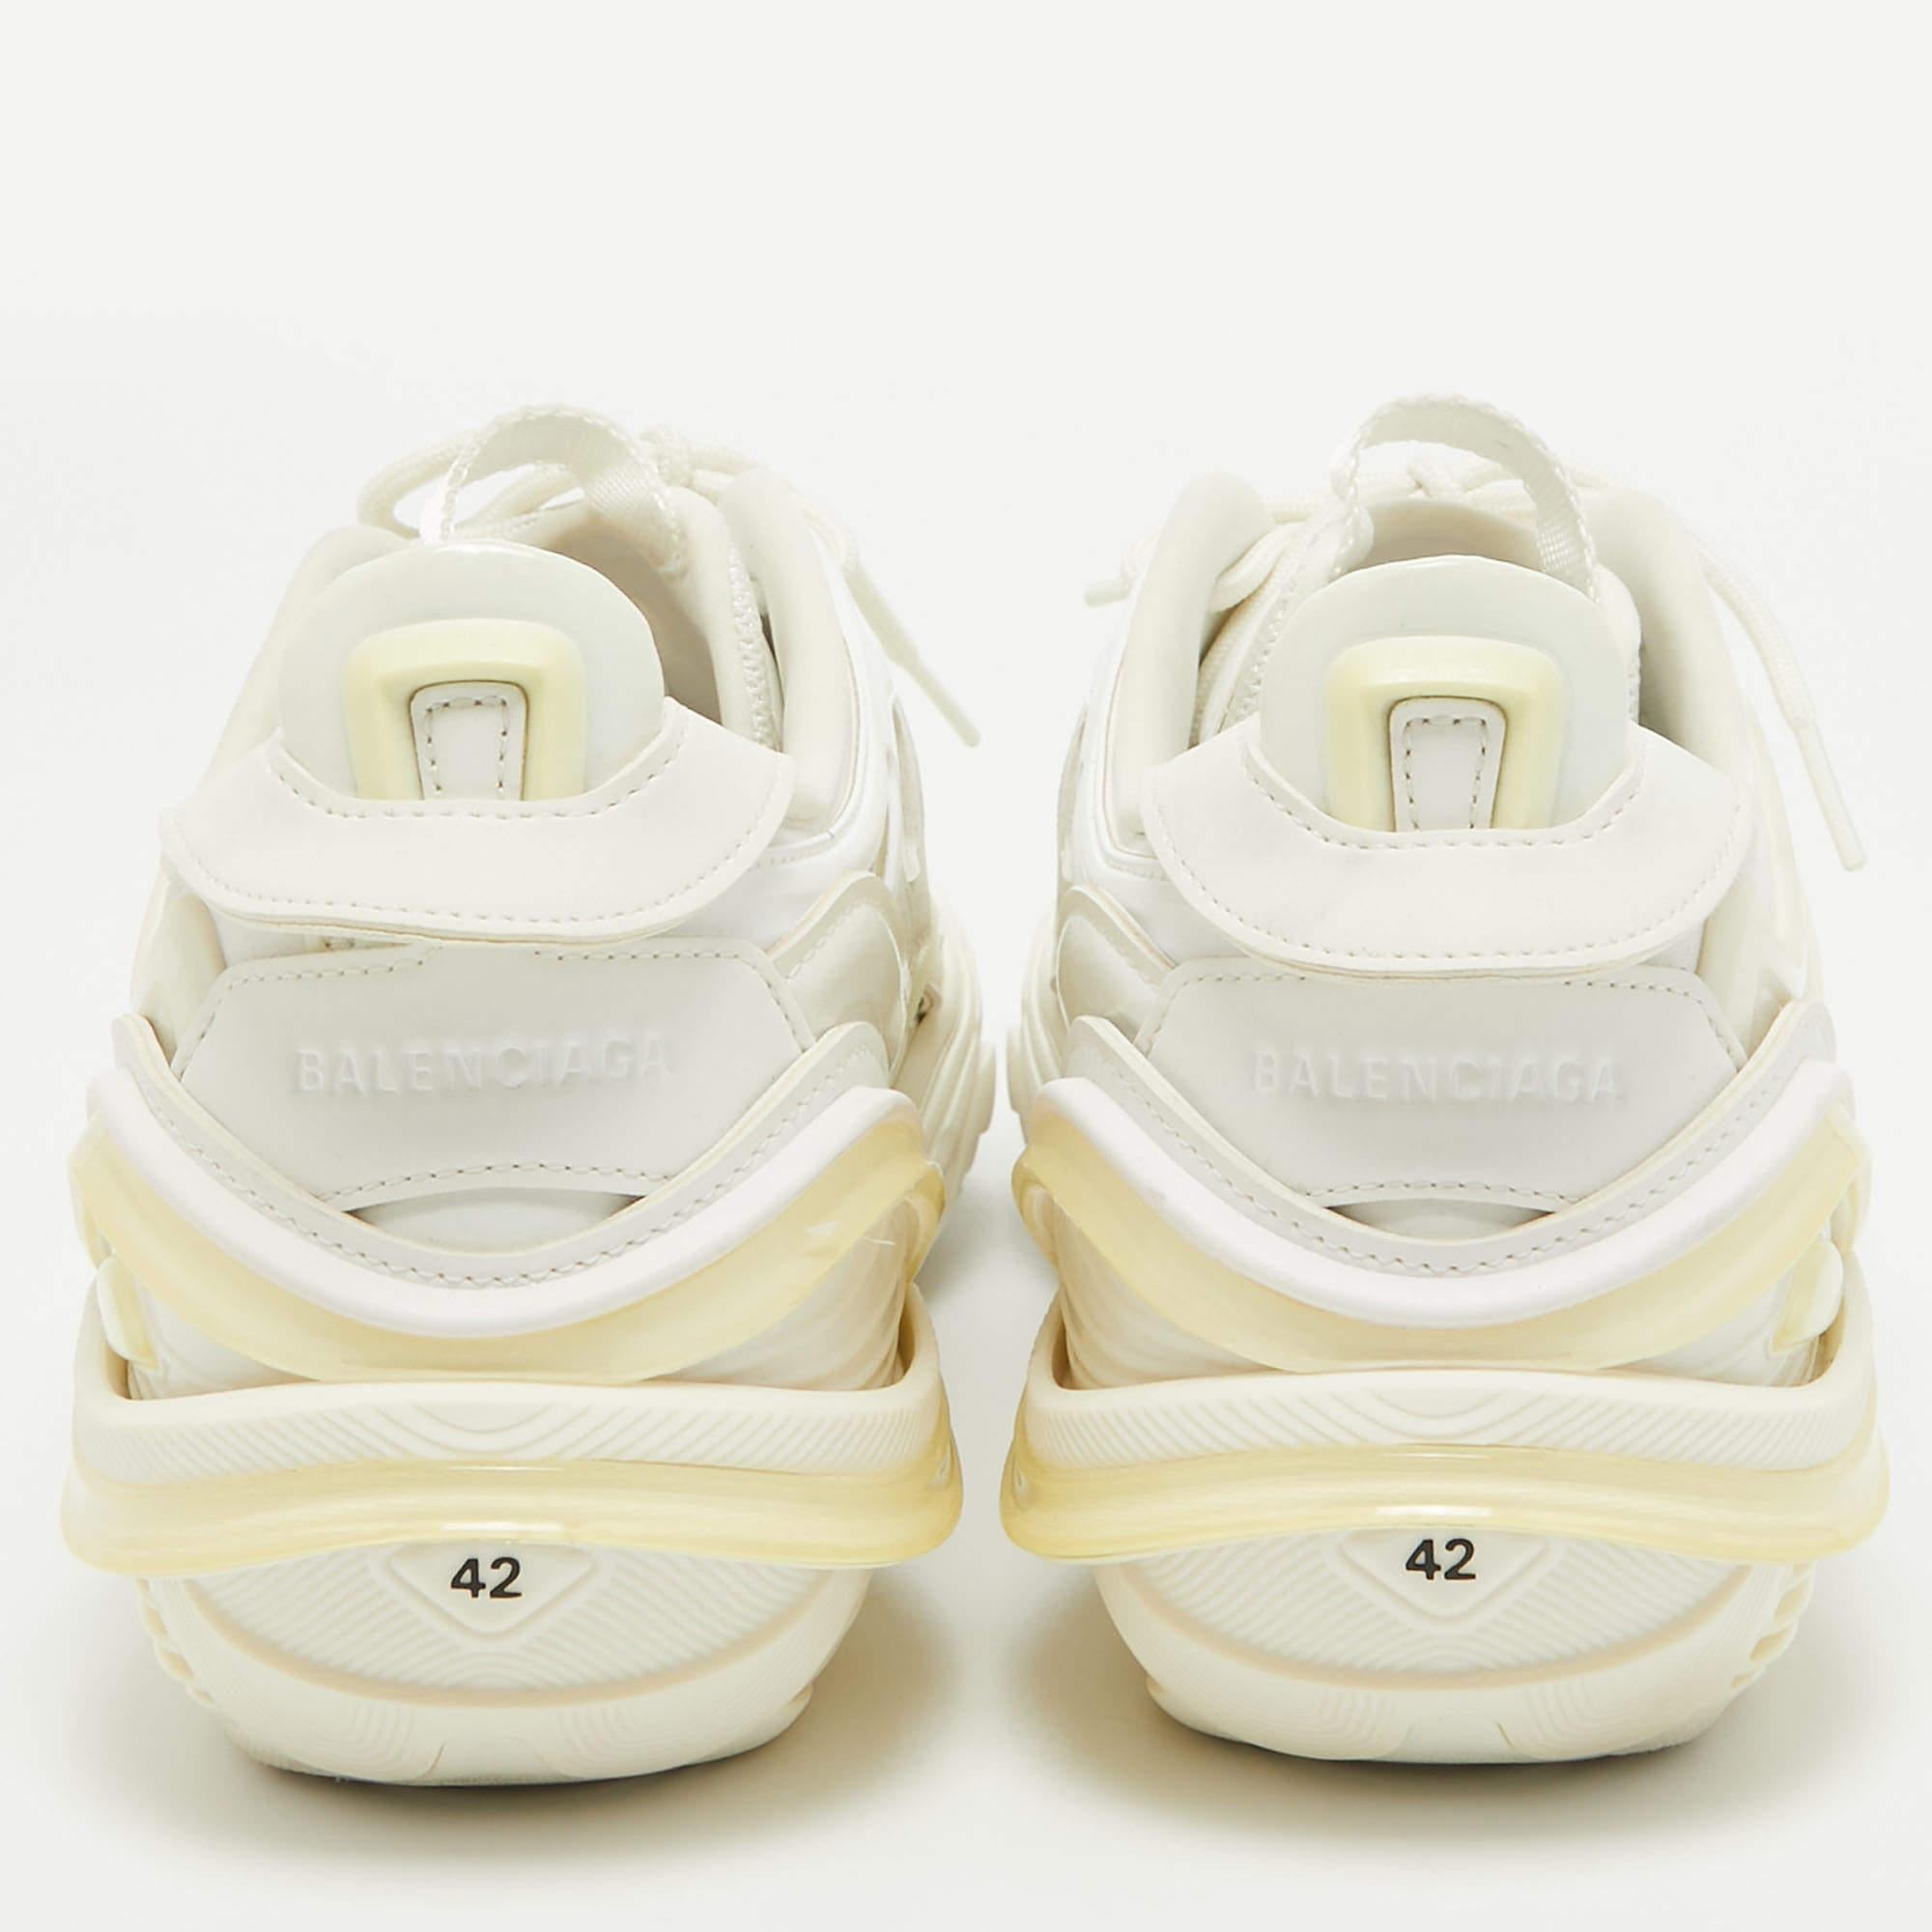 Men's Balenciaga White Rubber and Mesh Tyrex Sneakers Size 42